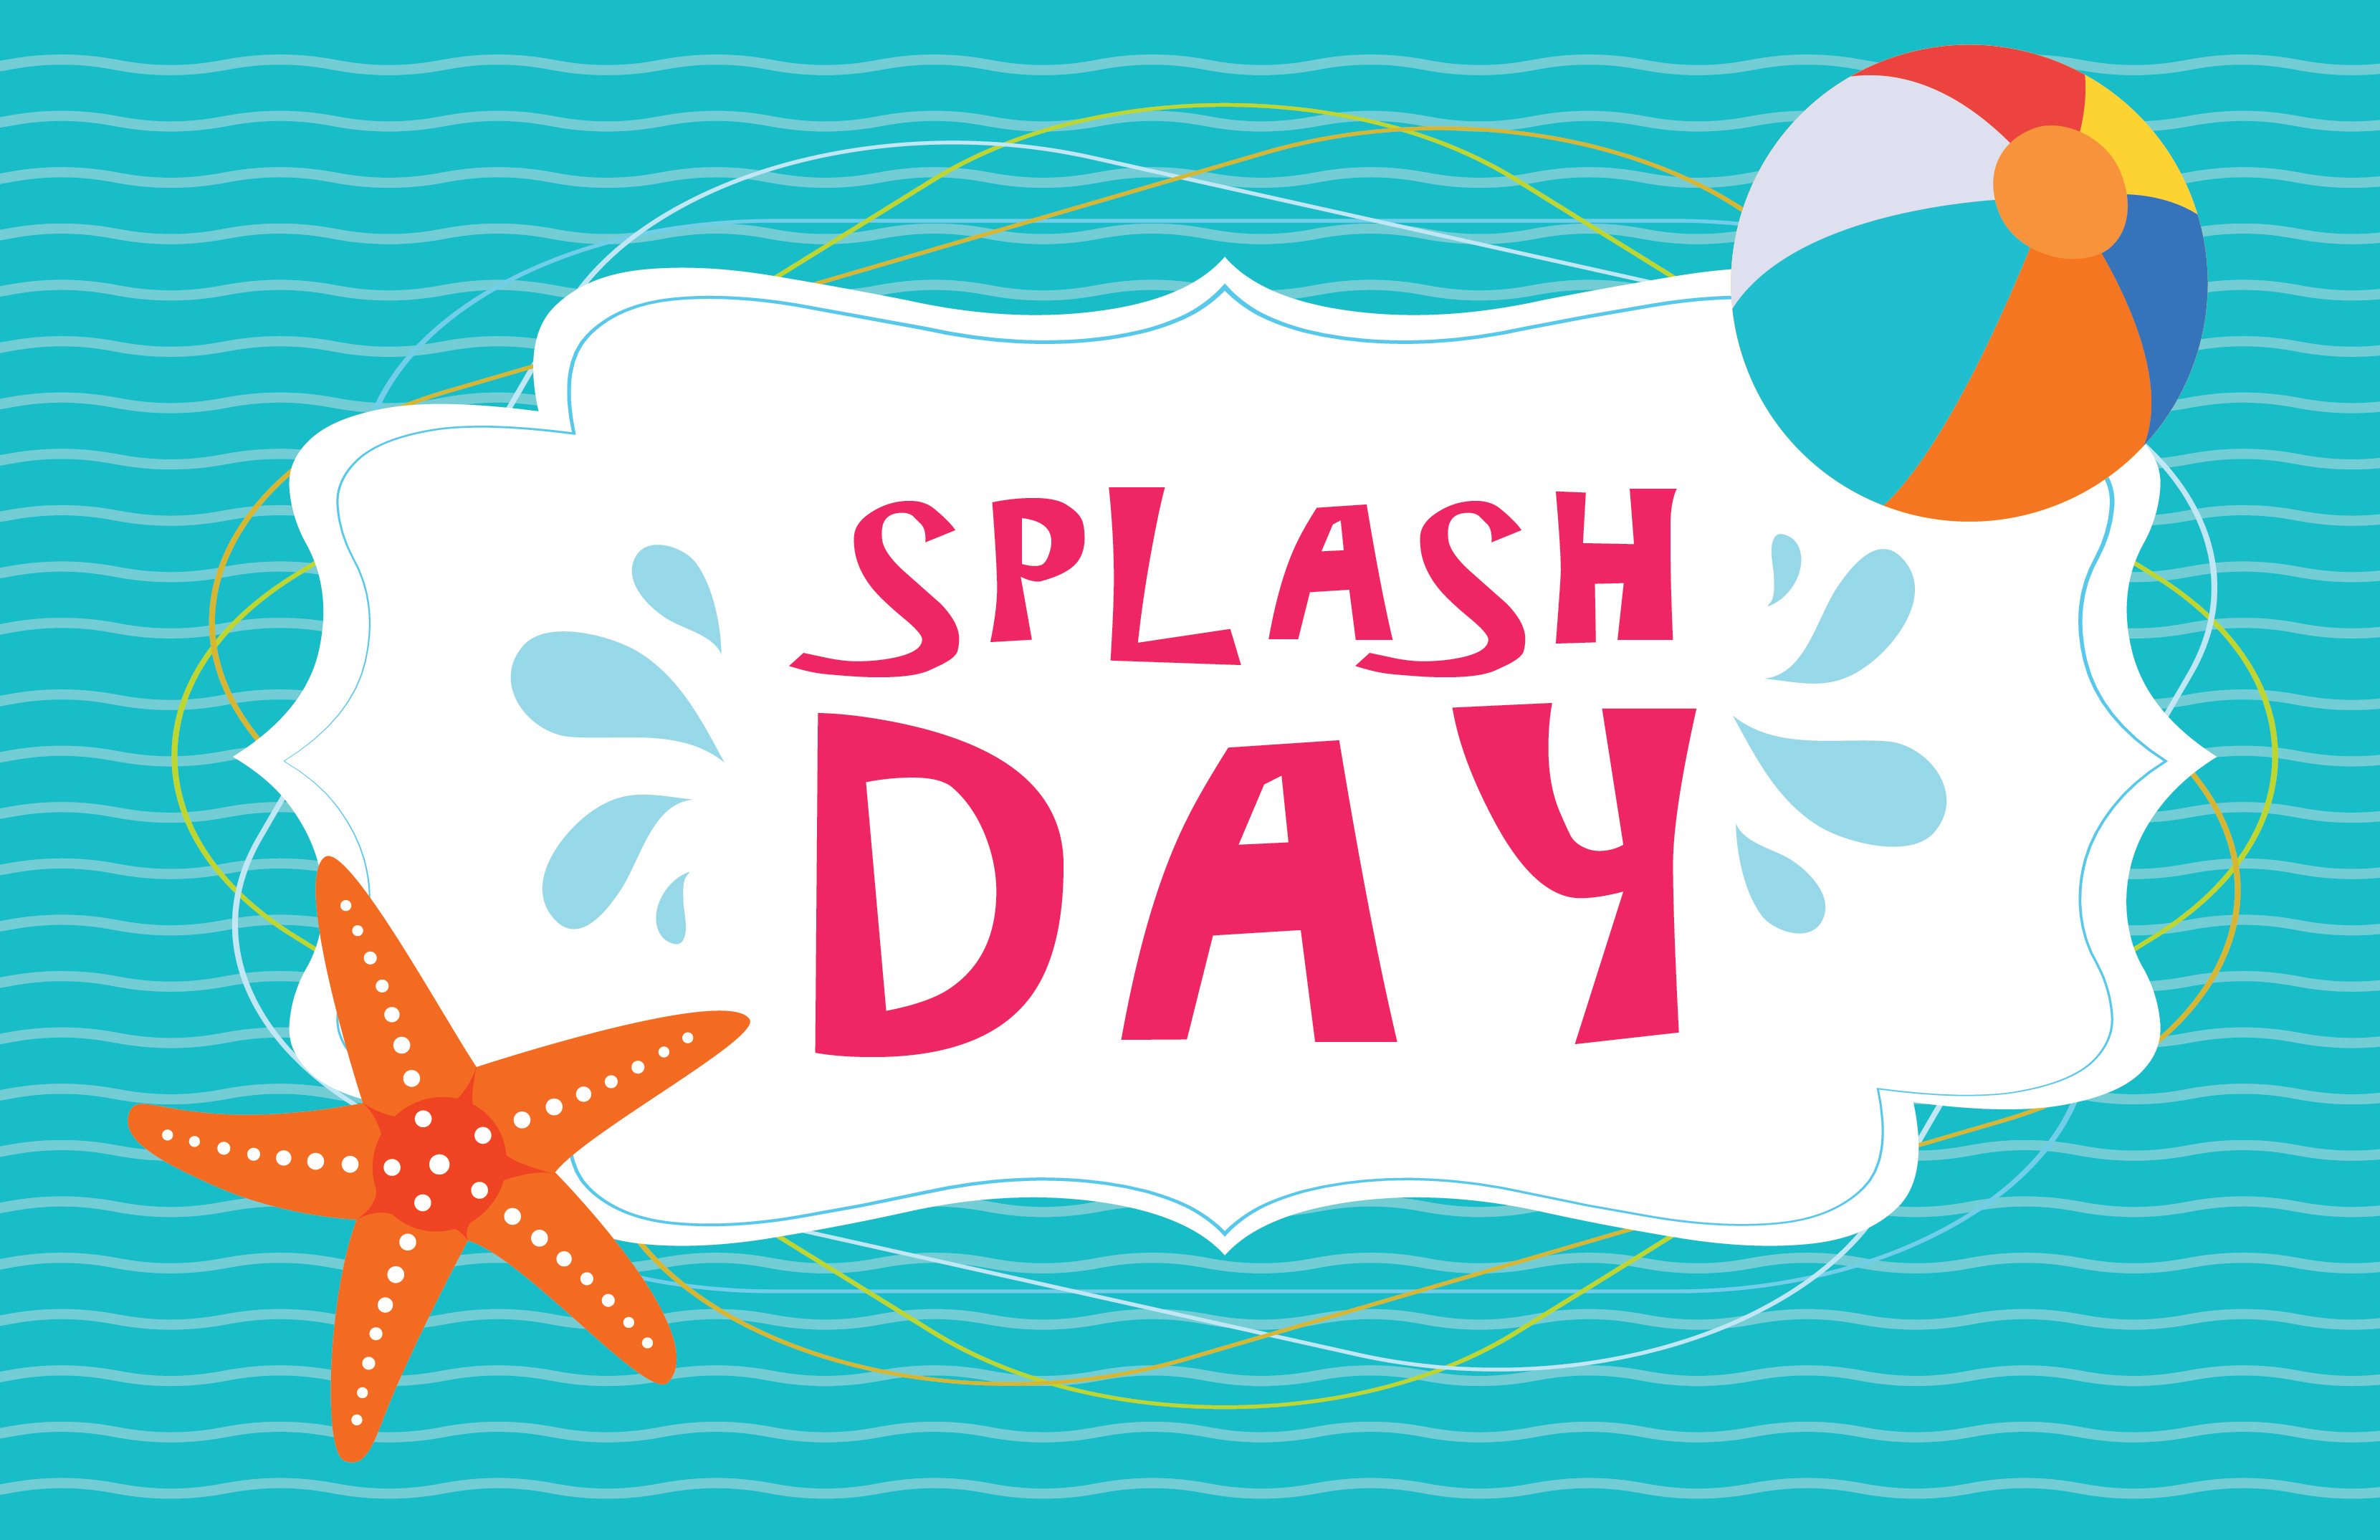 Get Ready to Make a Splash: Williamsburg Colony Splash Day Set for May 25